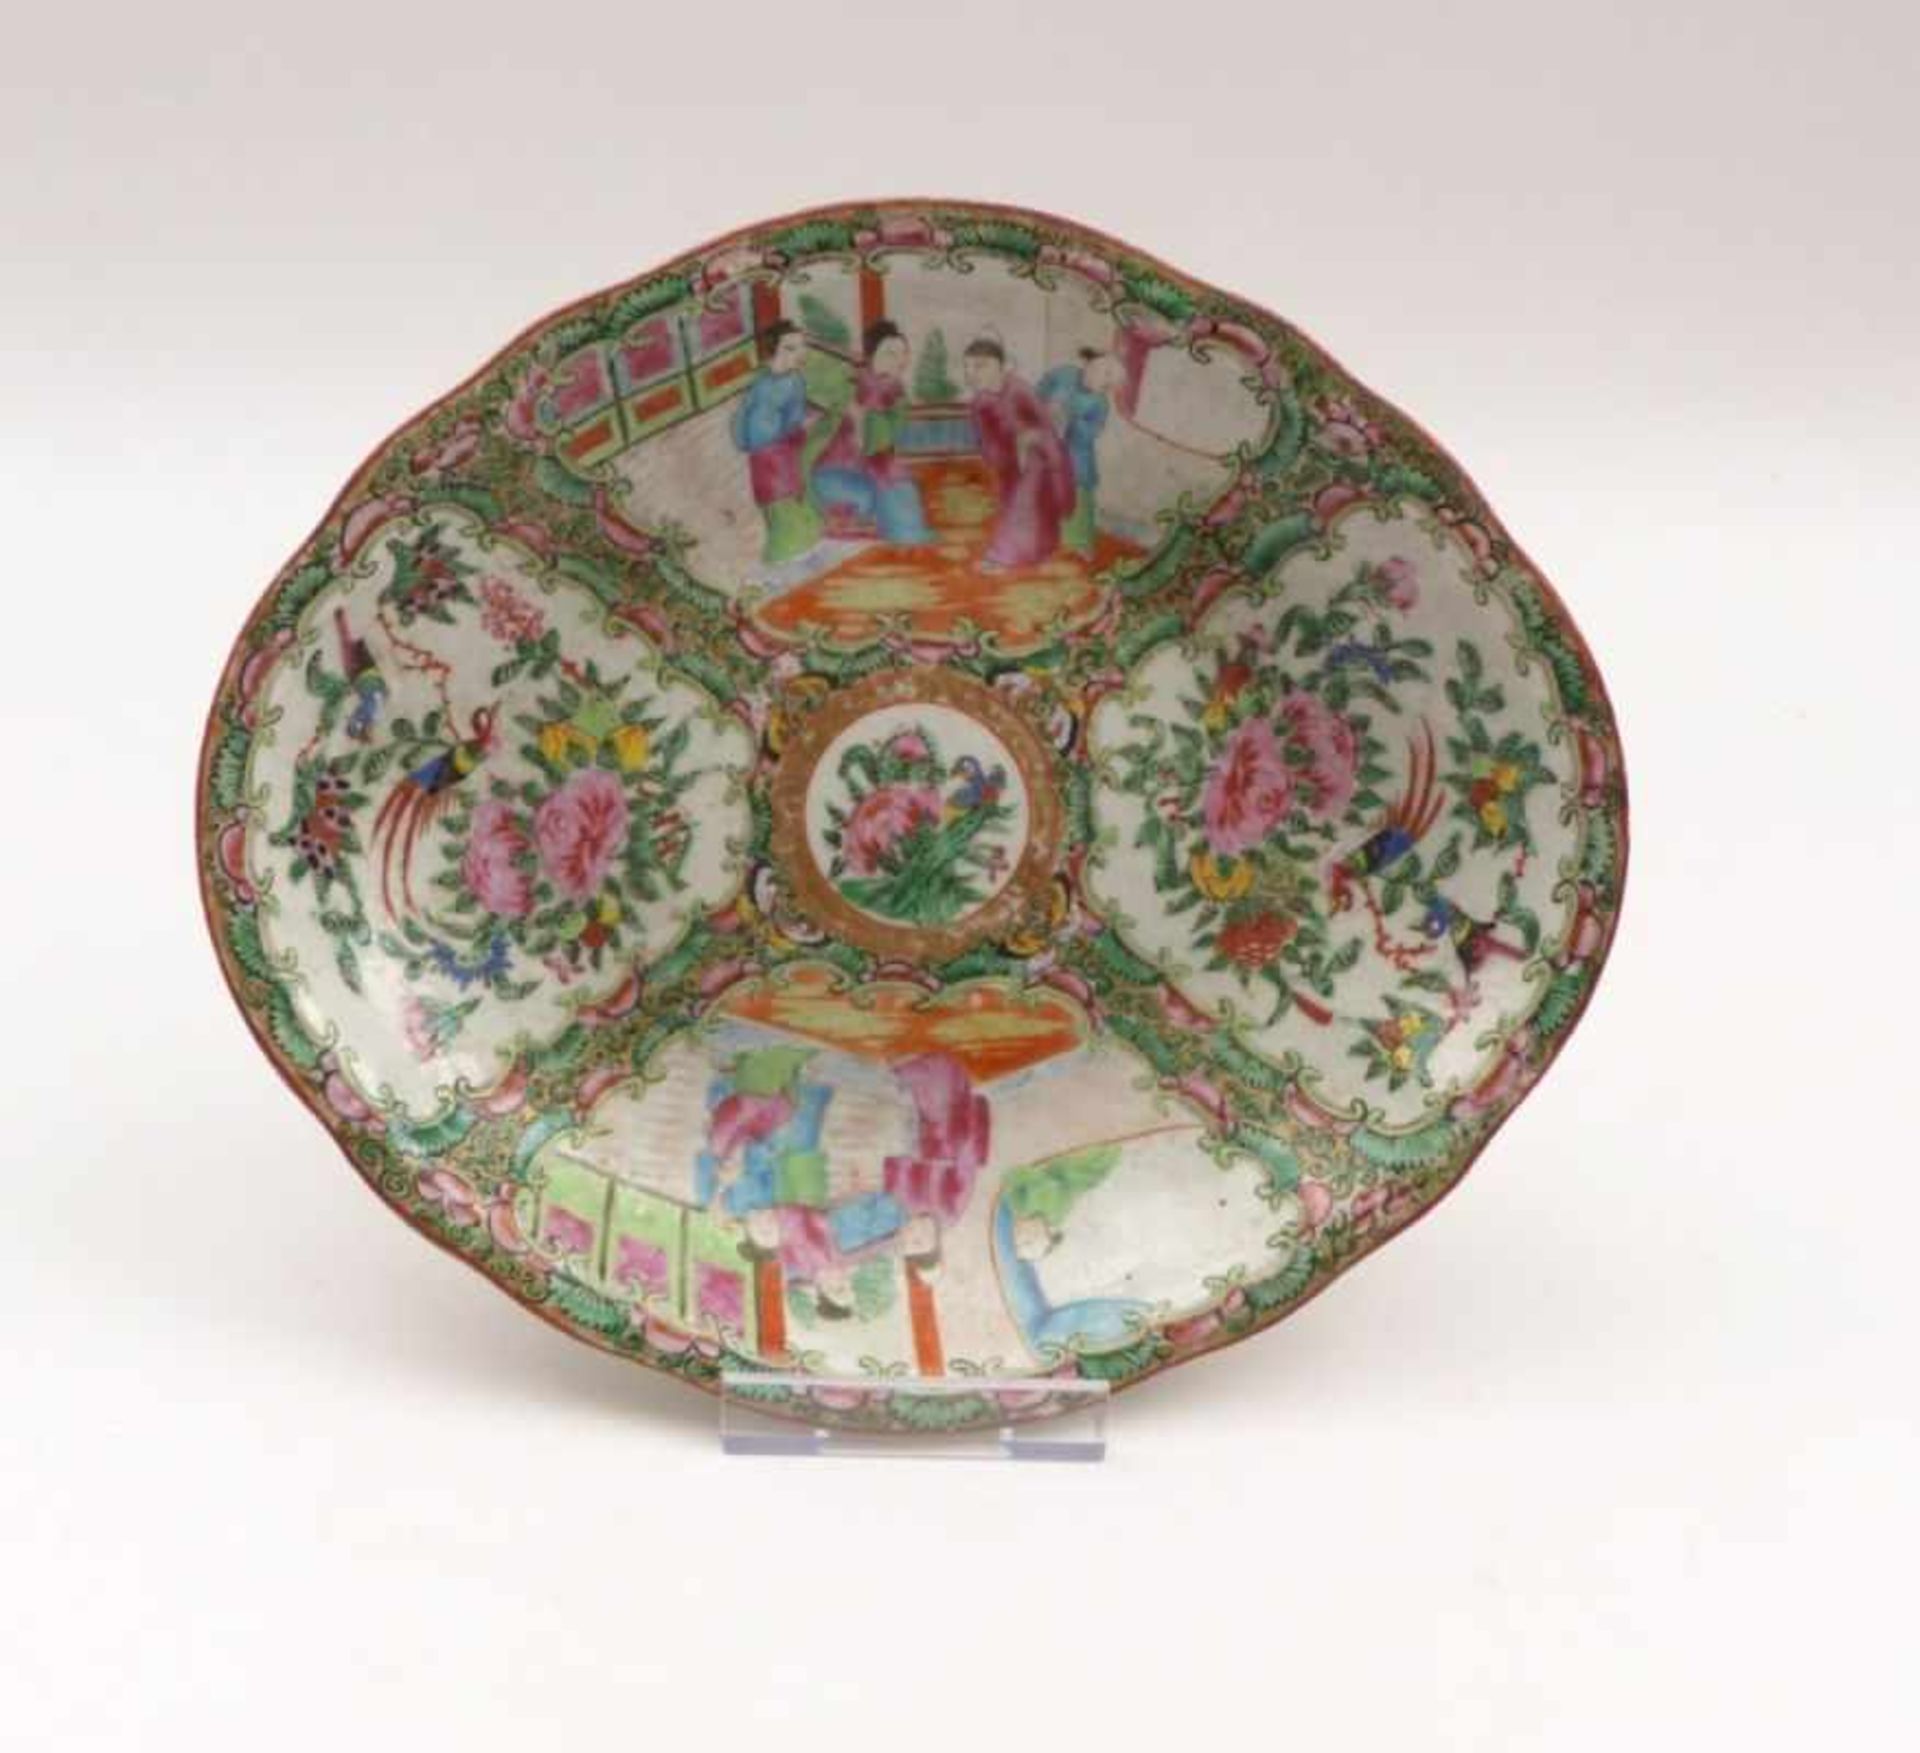 Kanton-Schale mit "Famille rose"-DekorChina, Qing-Dynastie, spätes 19. Jh.Ovale, passig